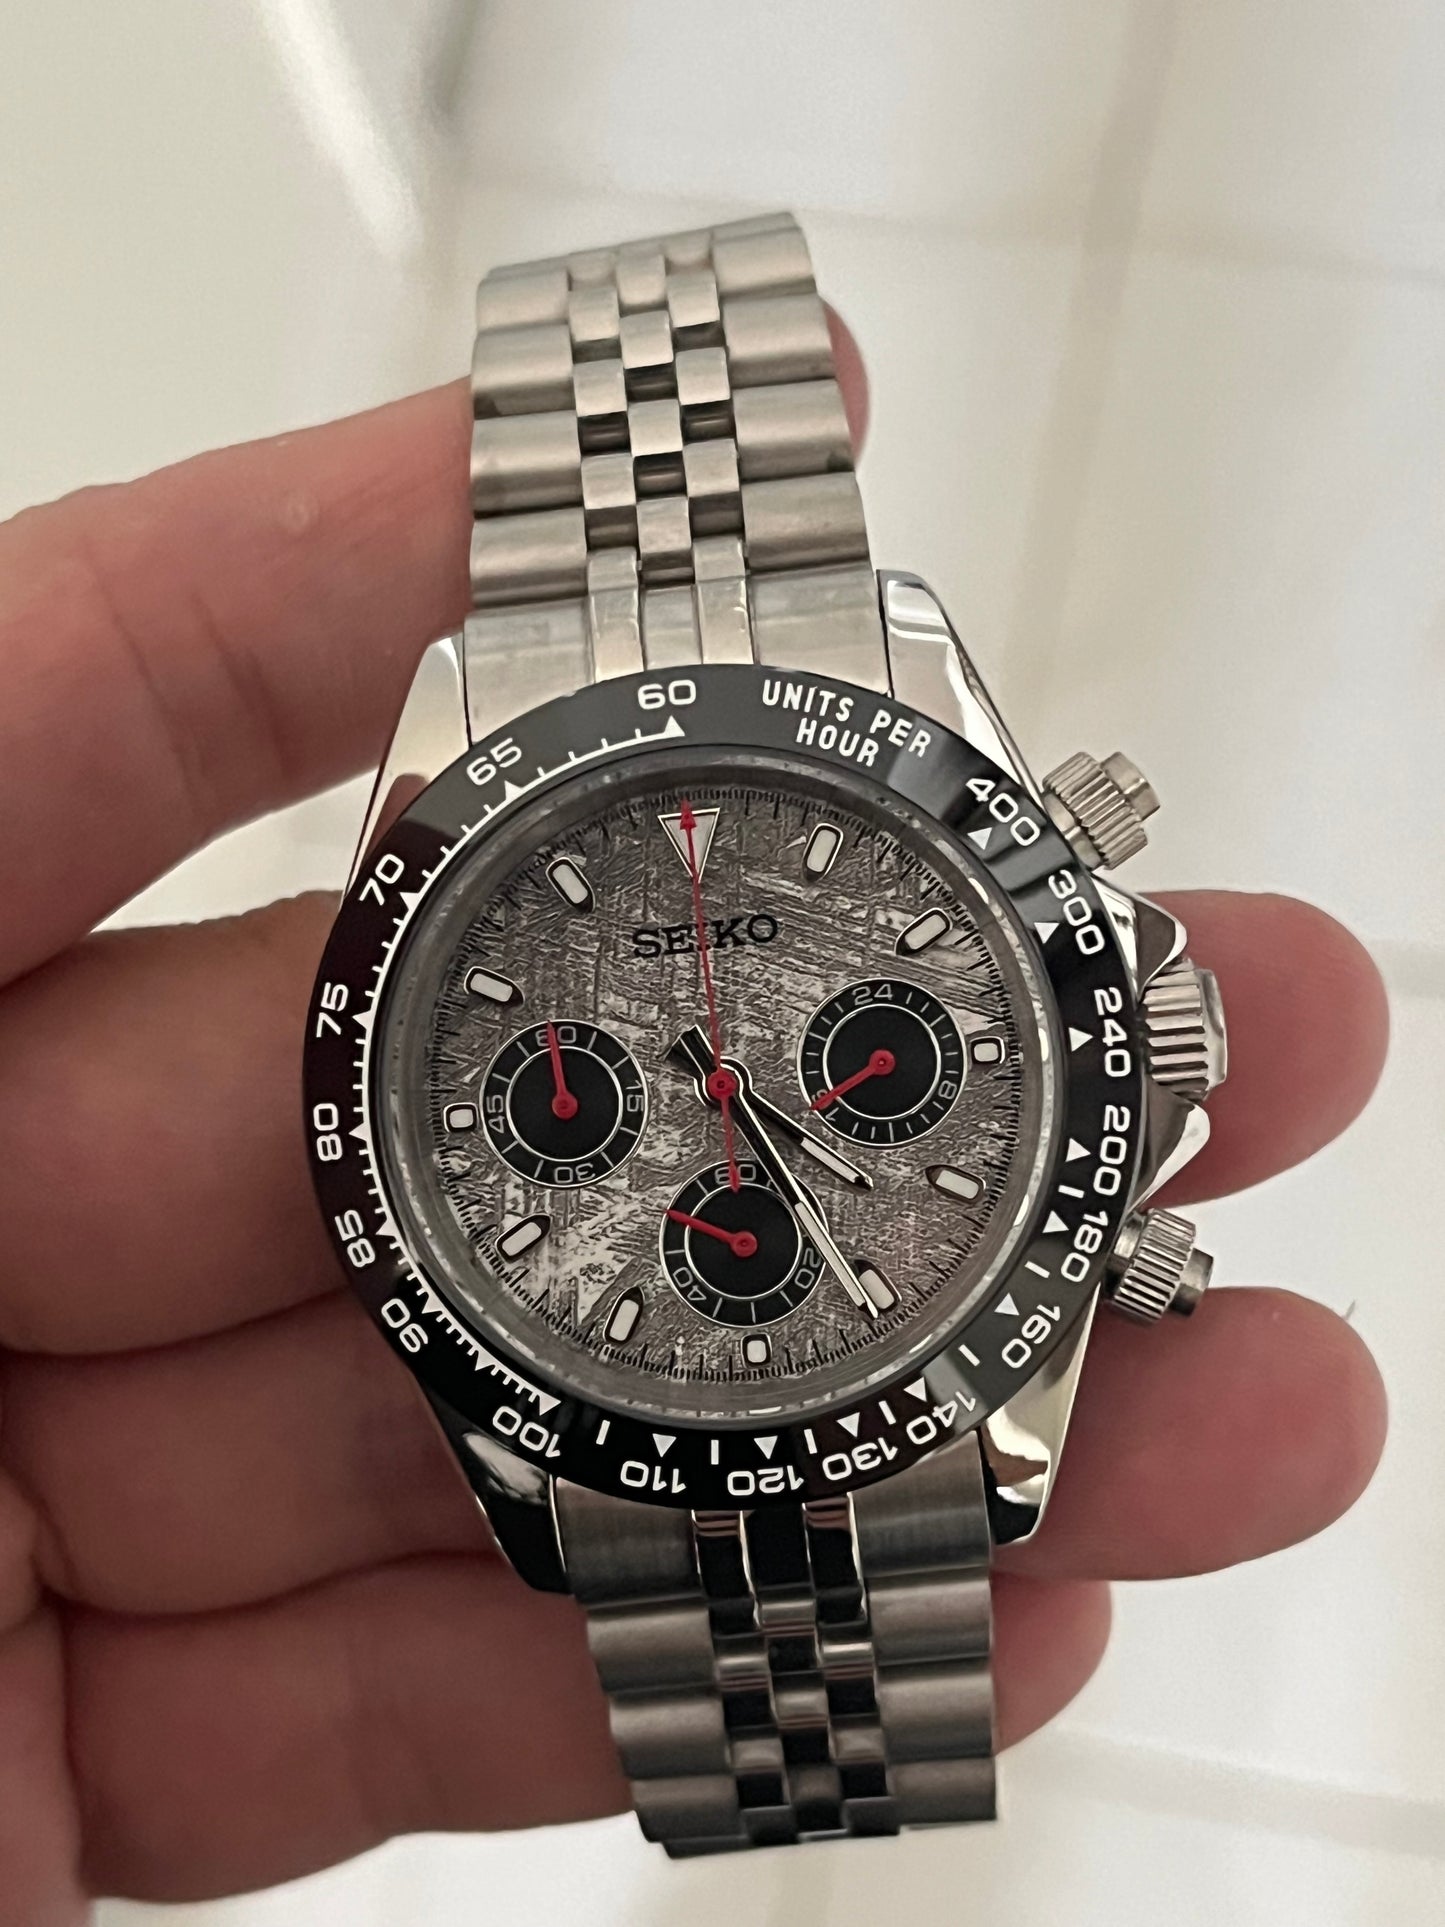 Seiko mod meteorite Daytona mod VK63 meca-quartz chronograph watch 40mm